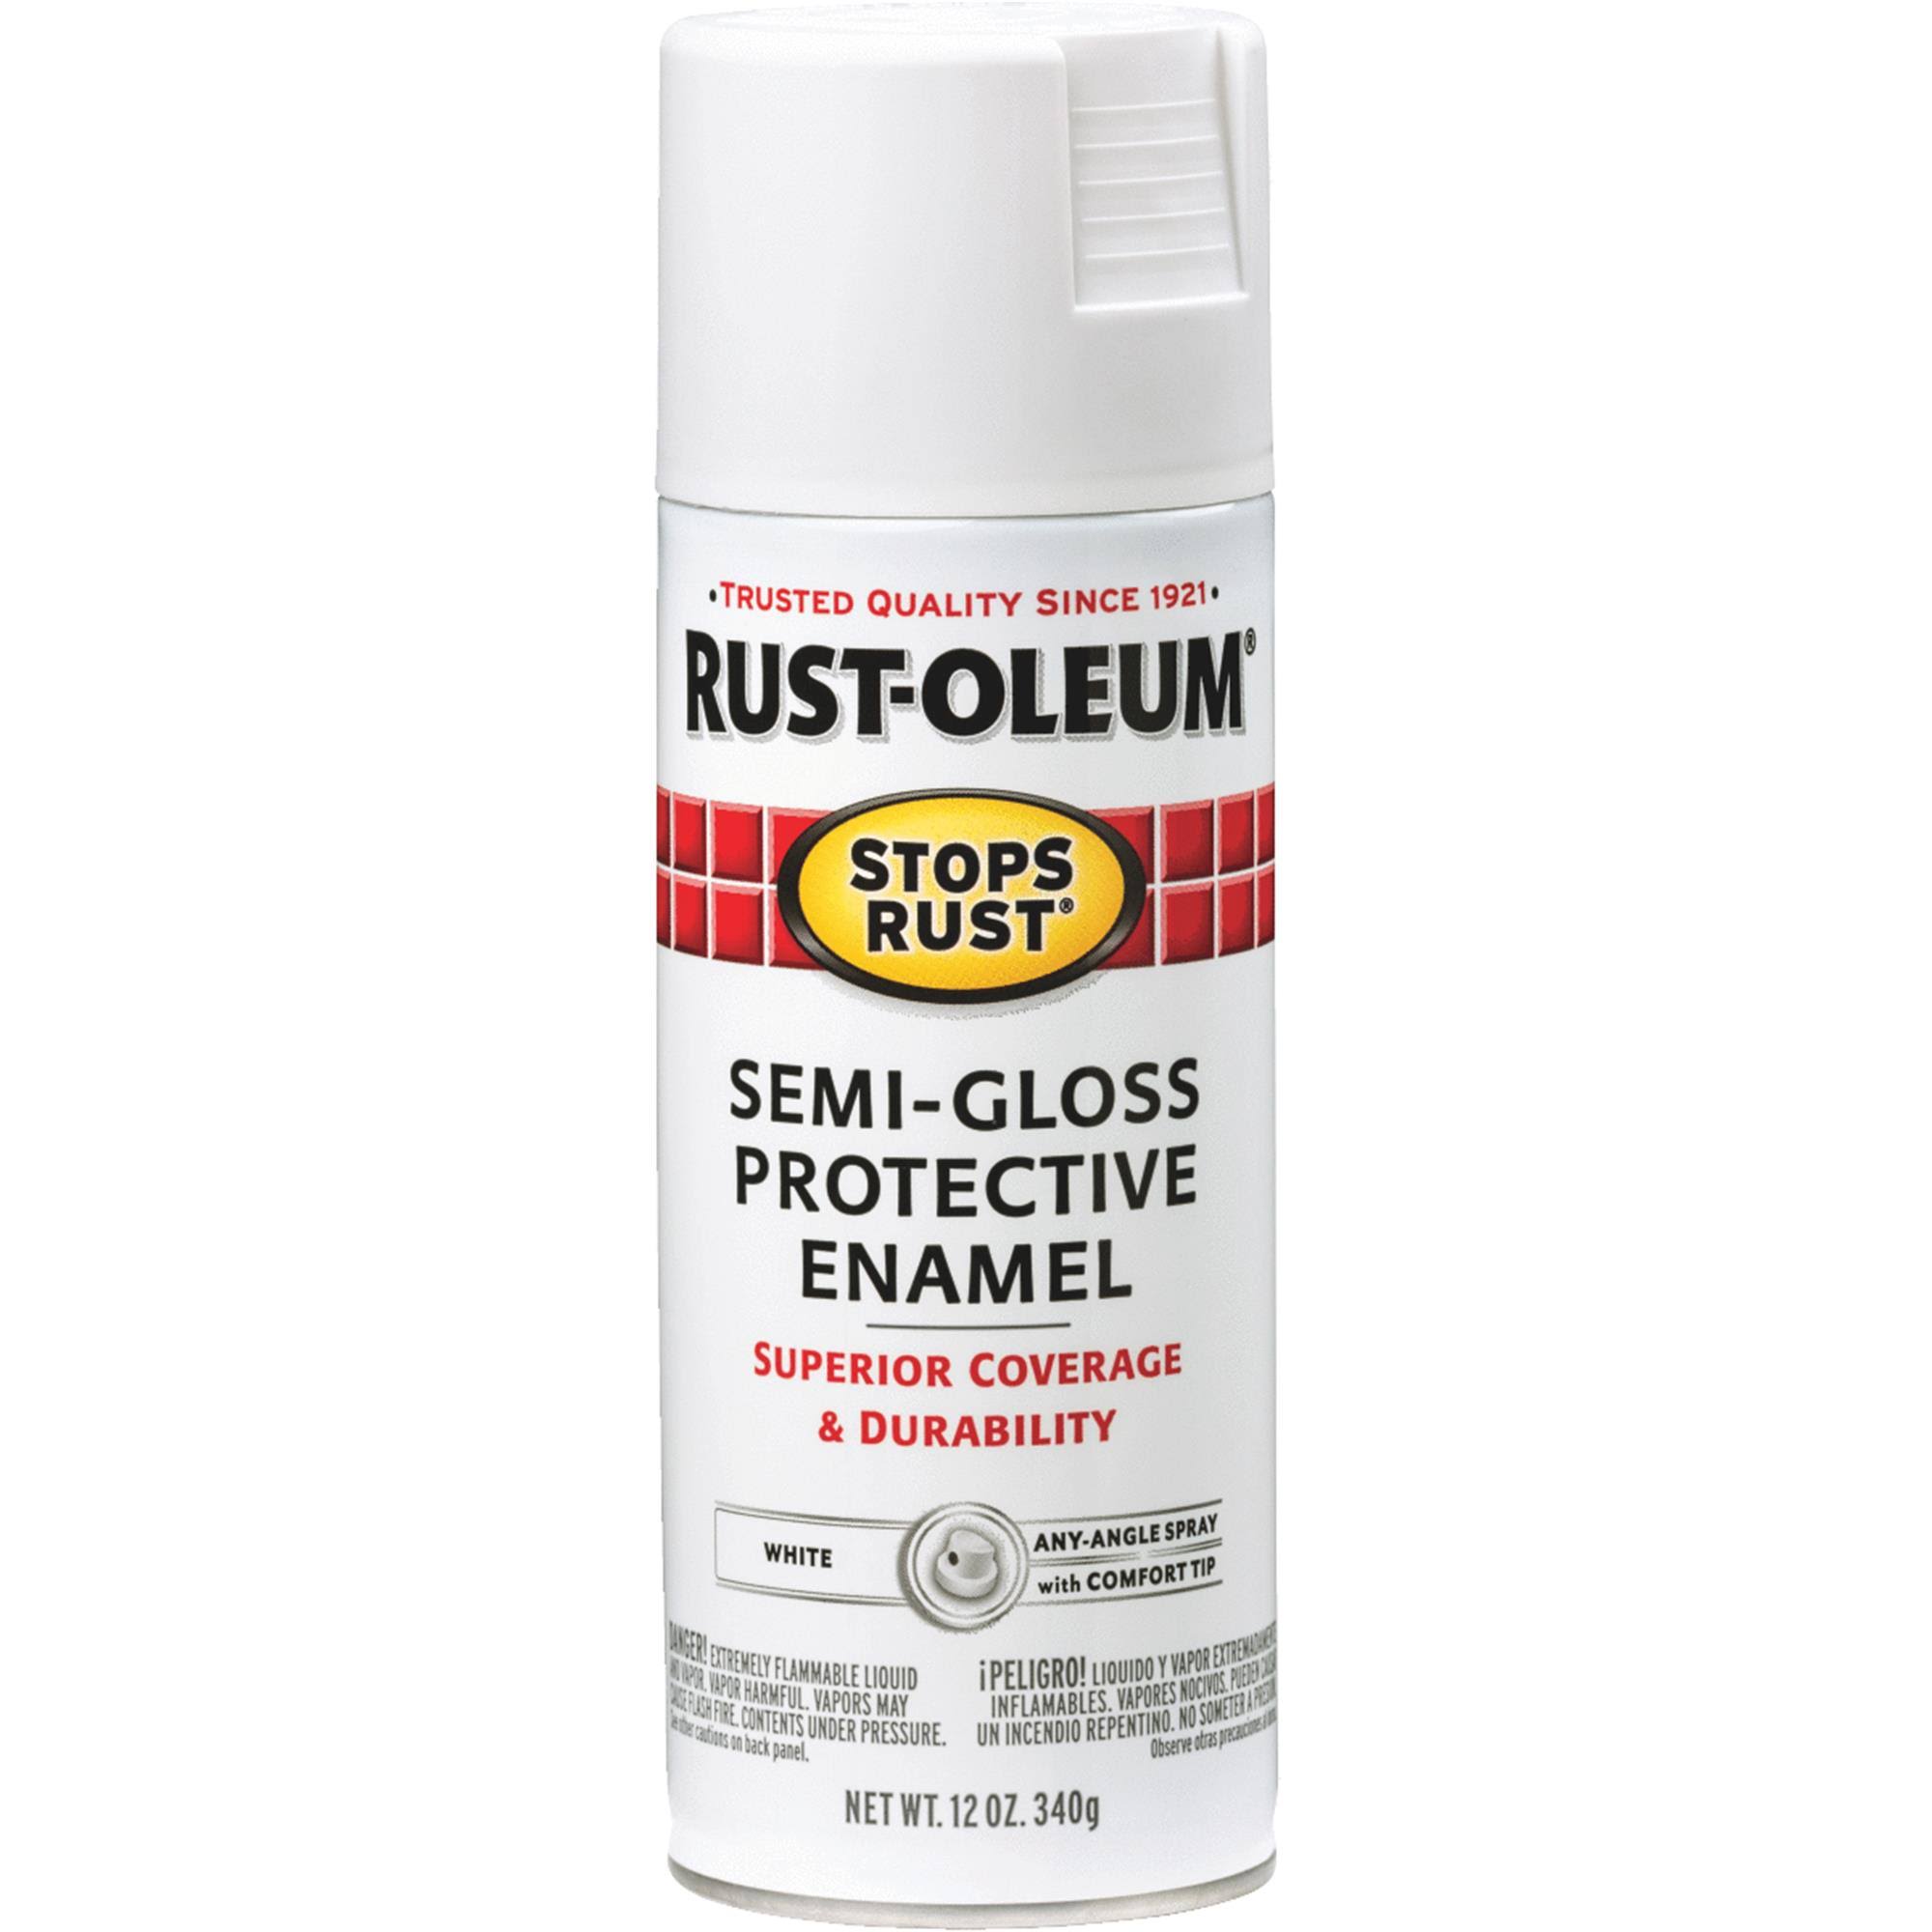 Rust-Oleum Stops Rust Semi-Gloss Protective Enamel - 12 oz, White